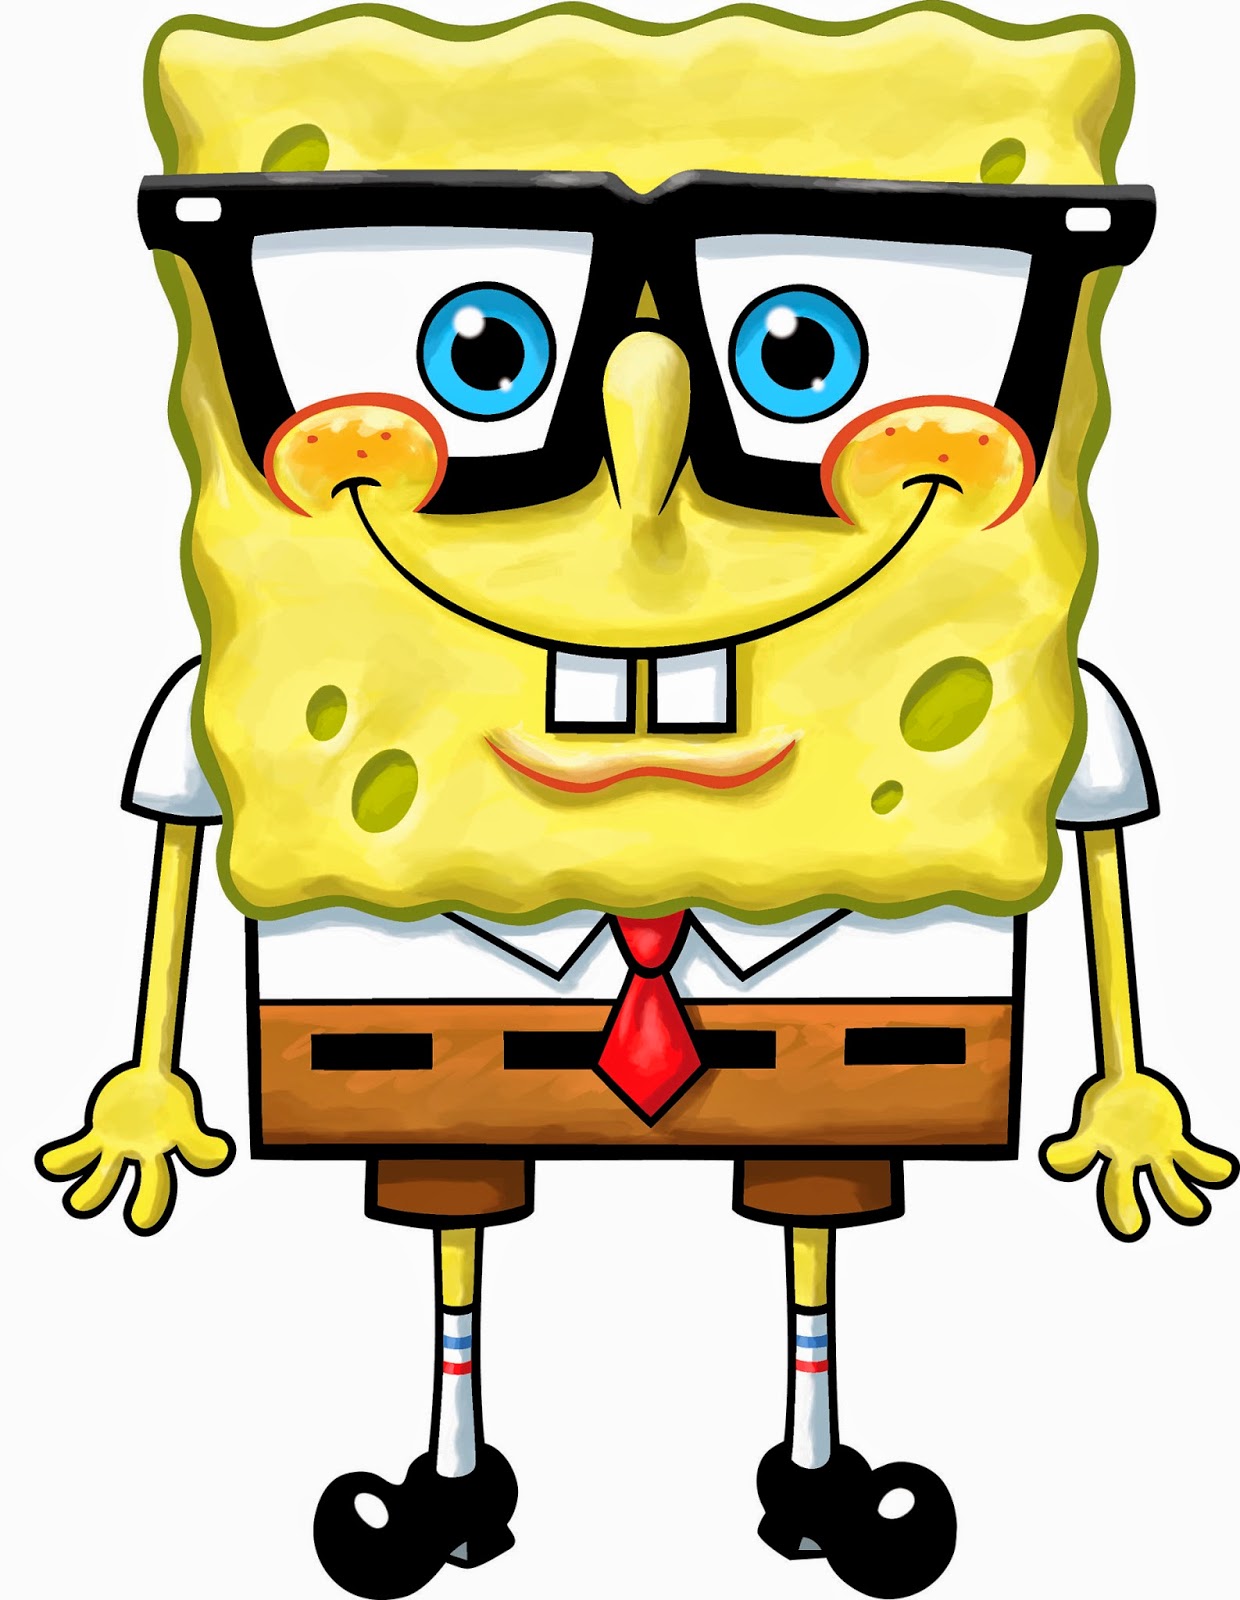 Kumpulan Gambar Spongebob Squarepants Gambar Lucu Terbaru Cartoon Animation Pictures